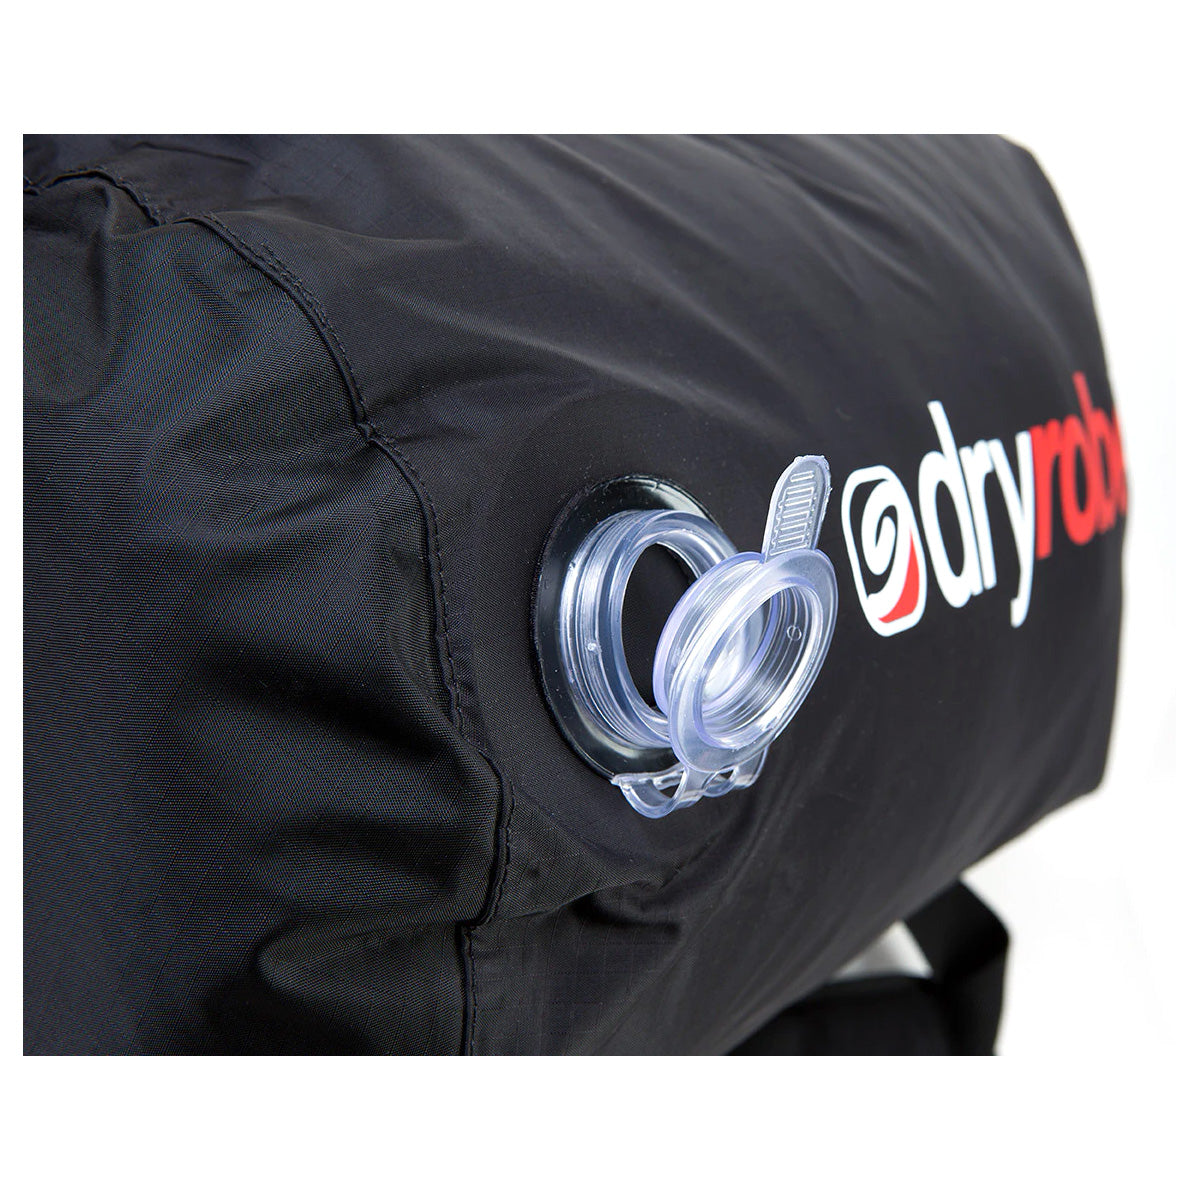 Dryrobe Compression Travel Bag - SUP